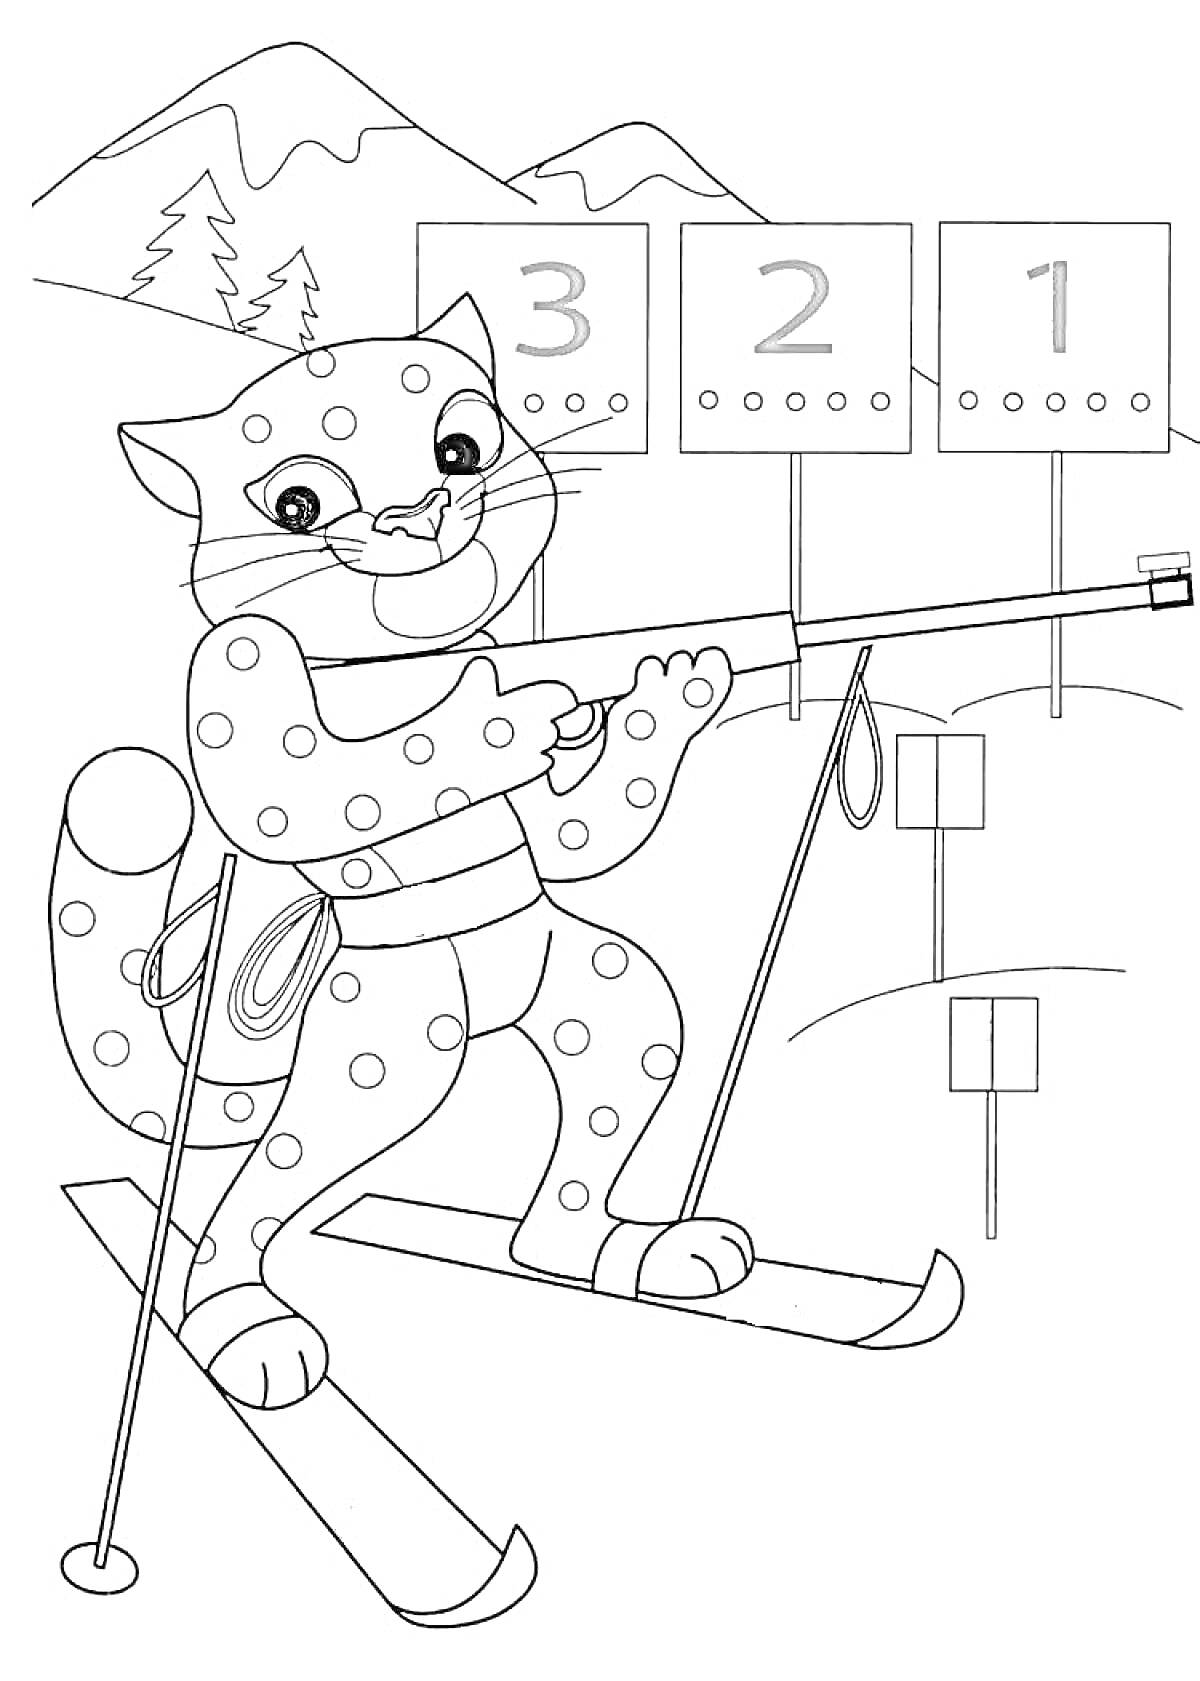 Раскраска Леопард-спортсмен на лыжах, стреляющий из винтовки на фоне гор с табло 1, 2, 3